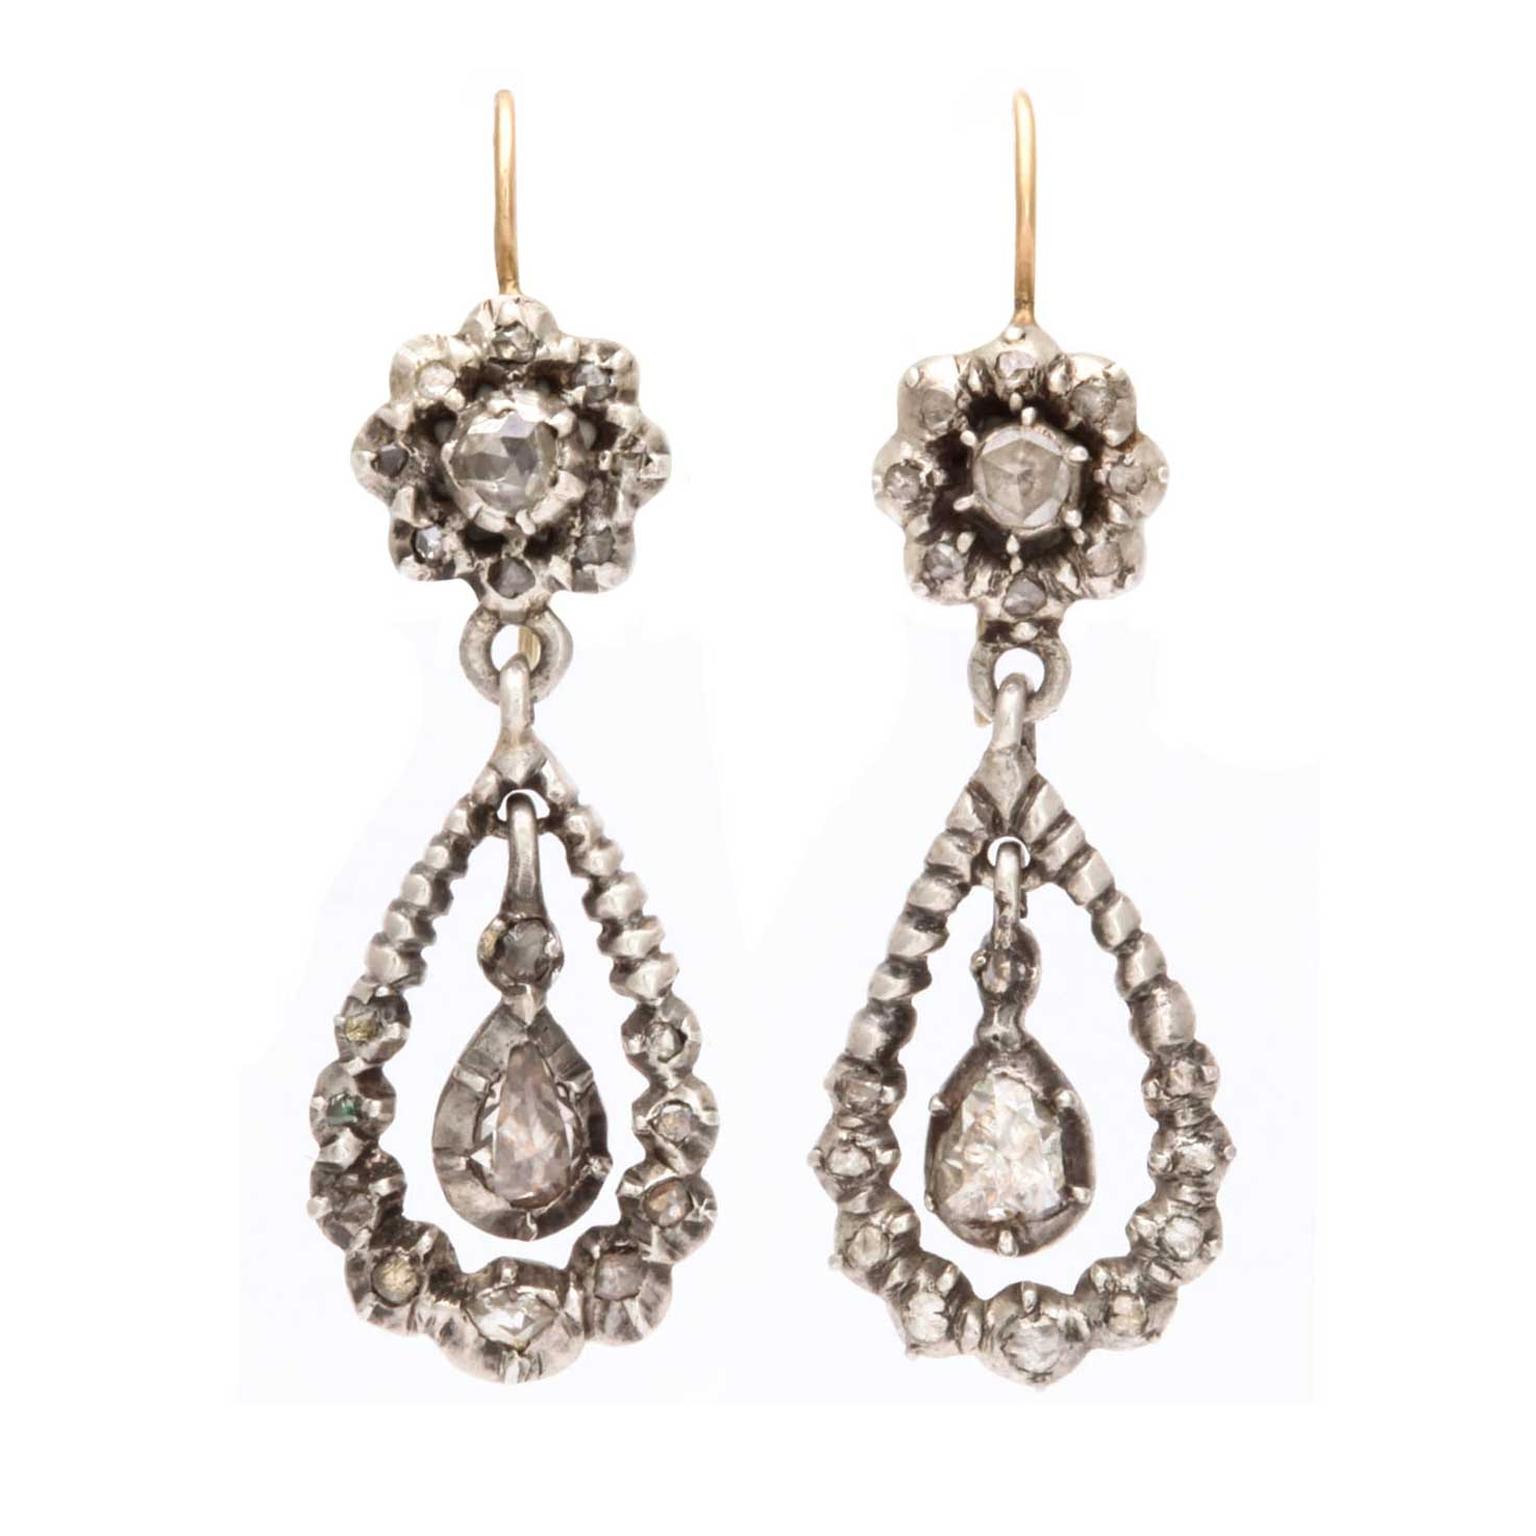 Georgian Glorious Antiques earrings